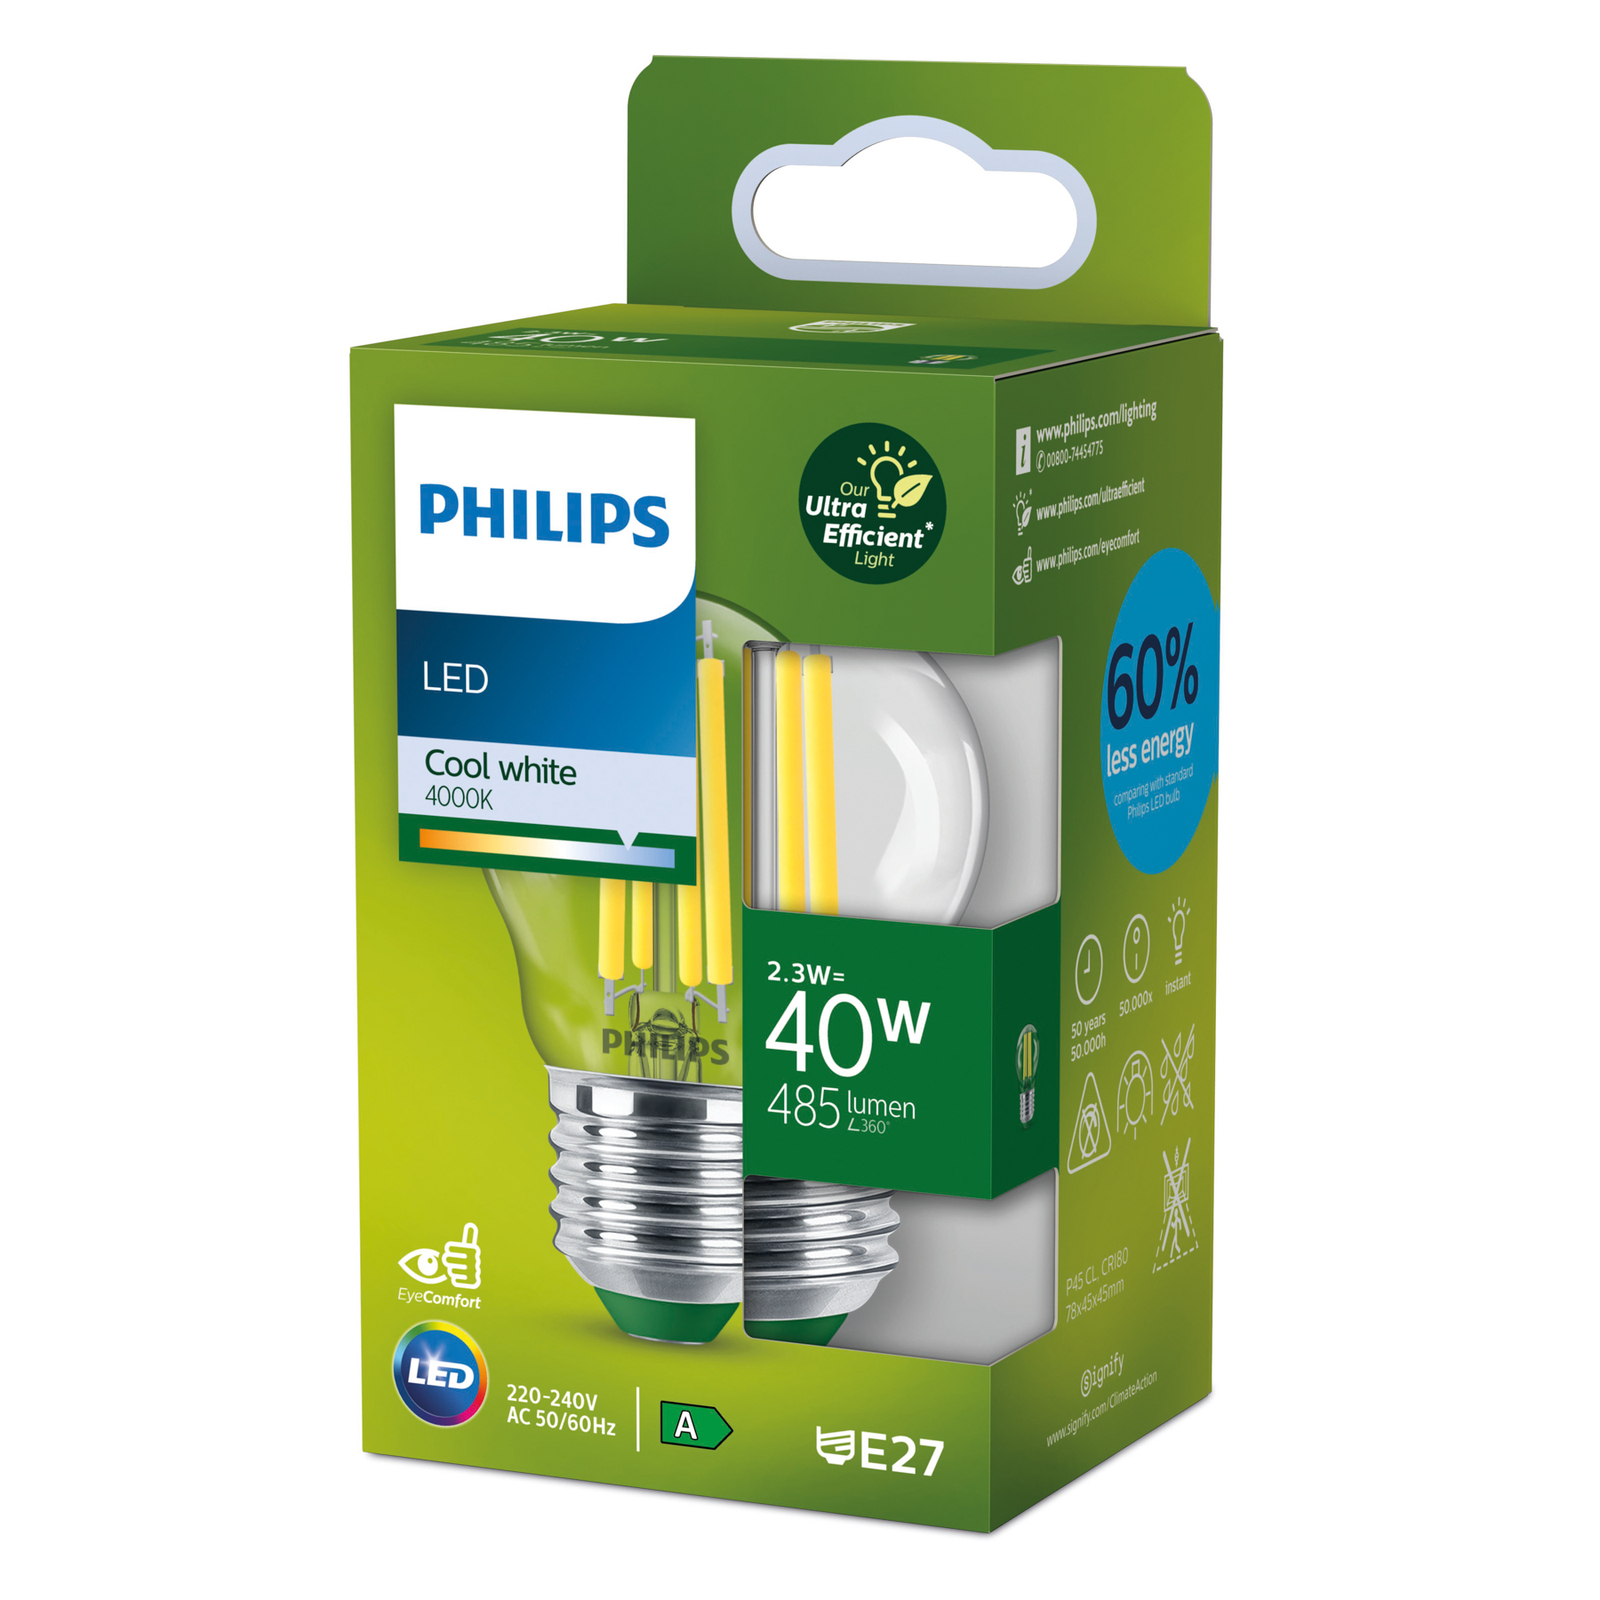 Philips E27 LED bulb G45 2.3W 485lm 4,000K clear